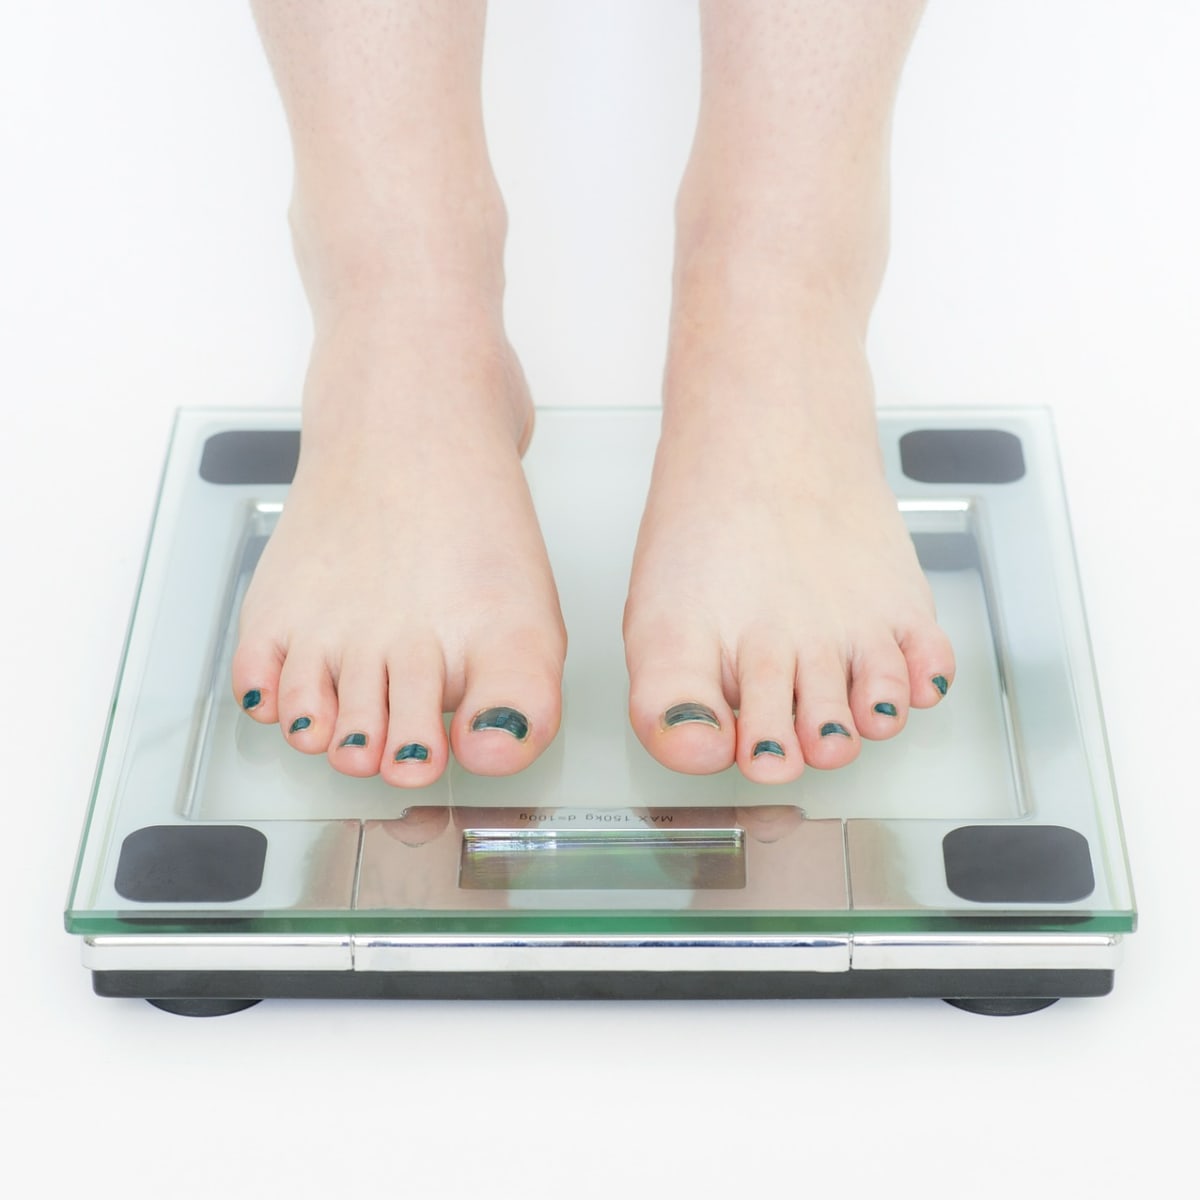 fitbit scale body fat accuracy